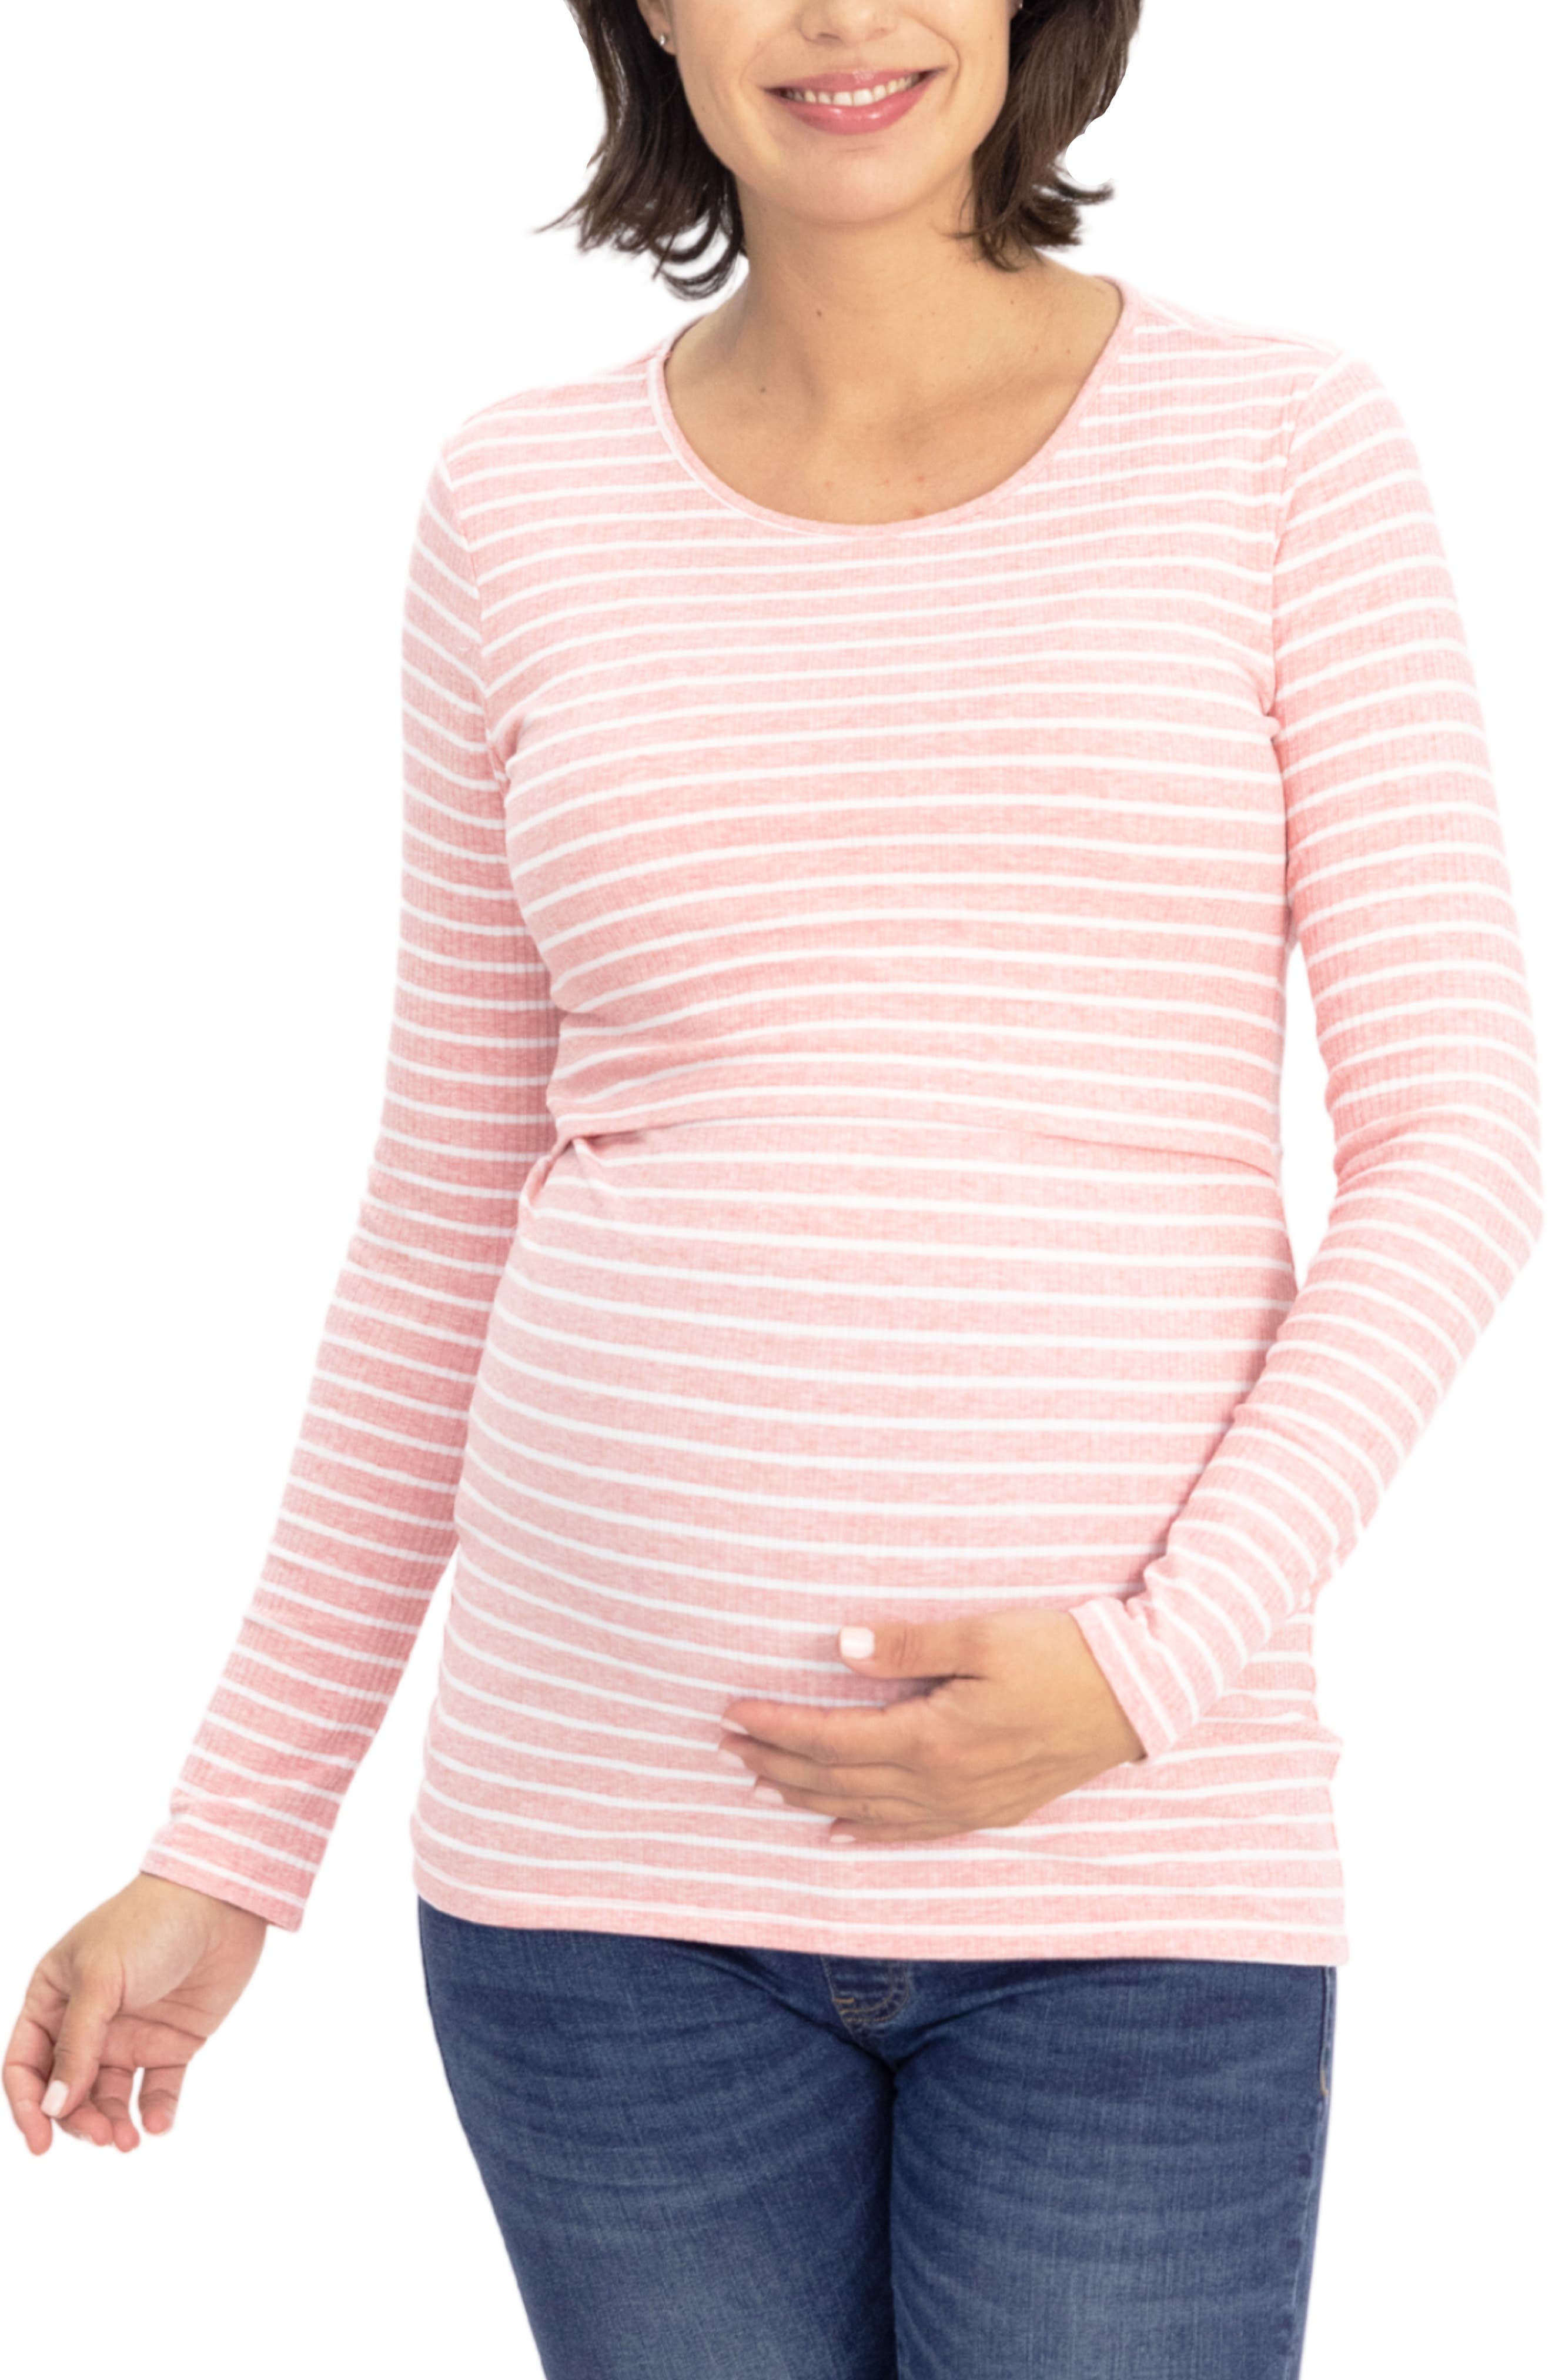 Brown Khaki Beige Lace Maternity Long Sleeve 3/4 Sleeve MaternityTop  S M L XL 